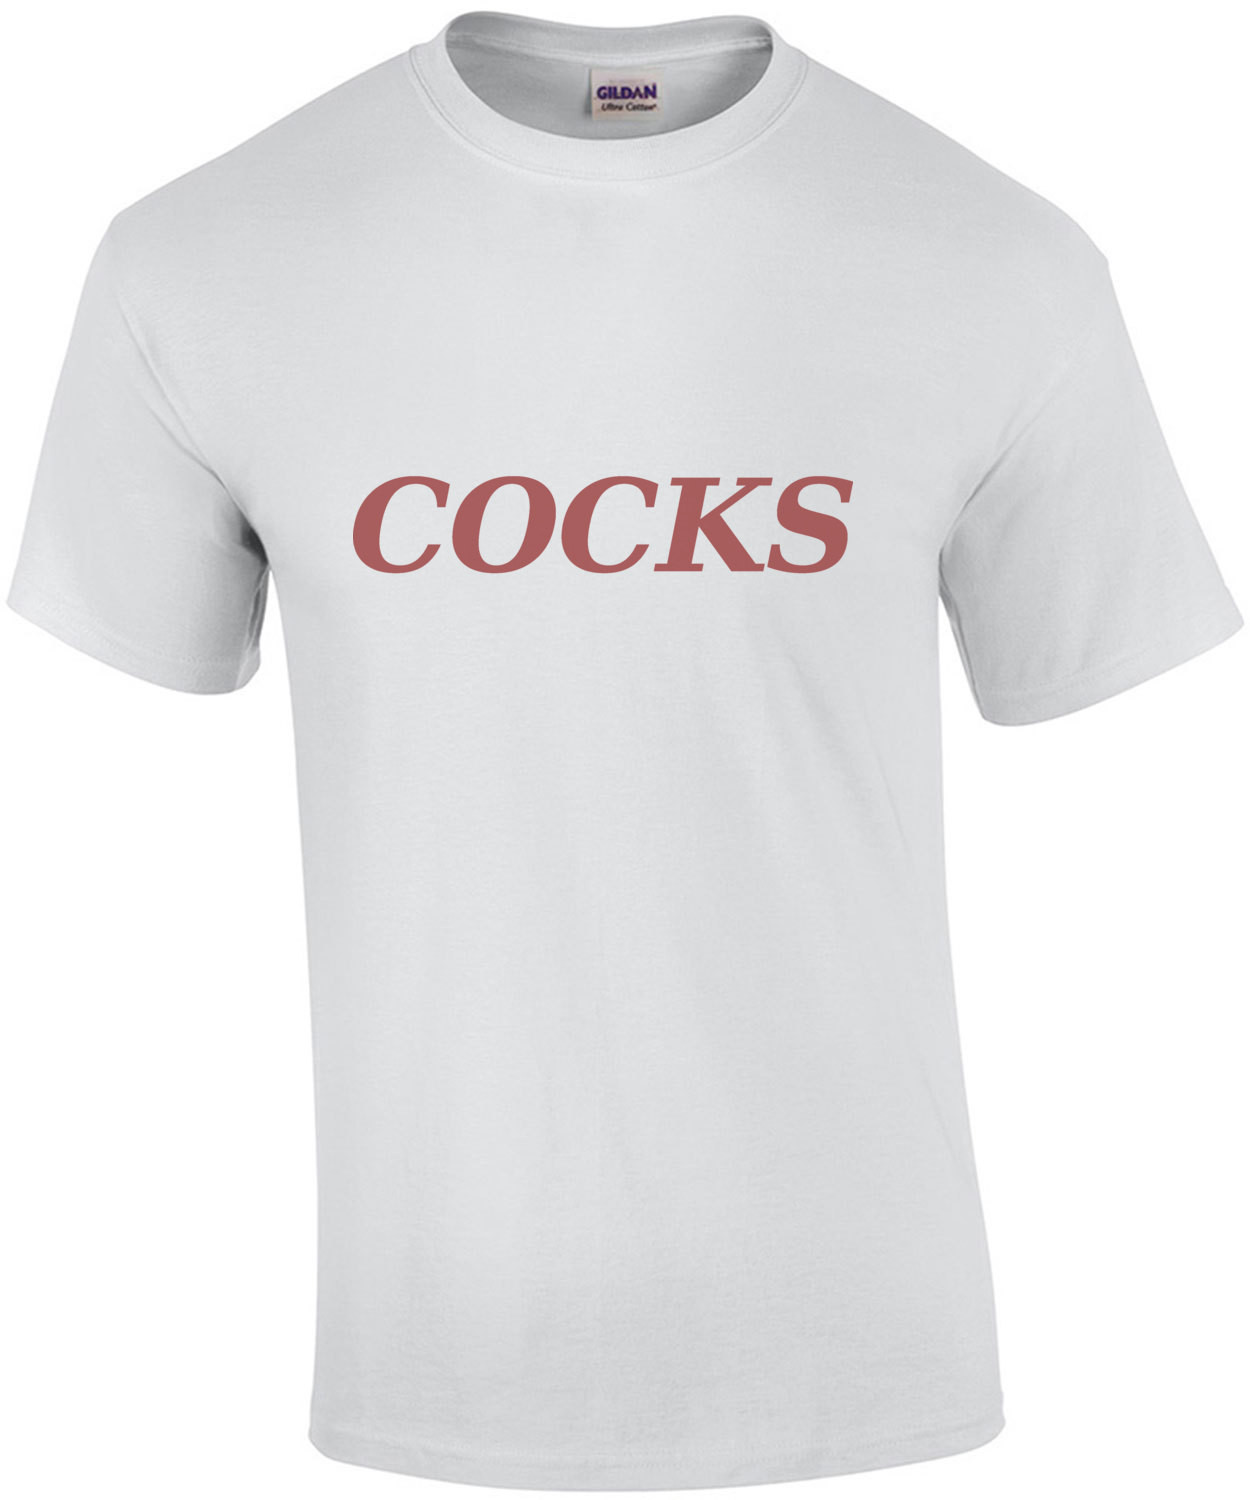 Cocks - South Carolina T-Shirt